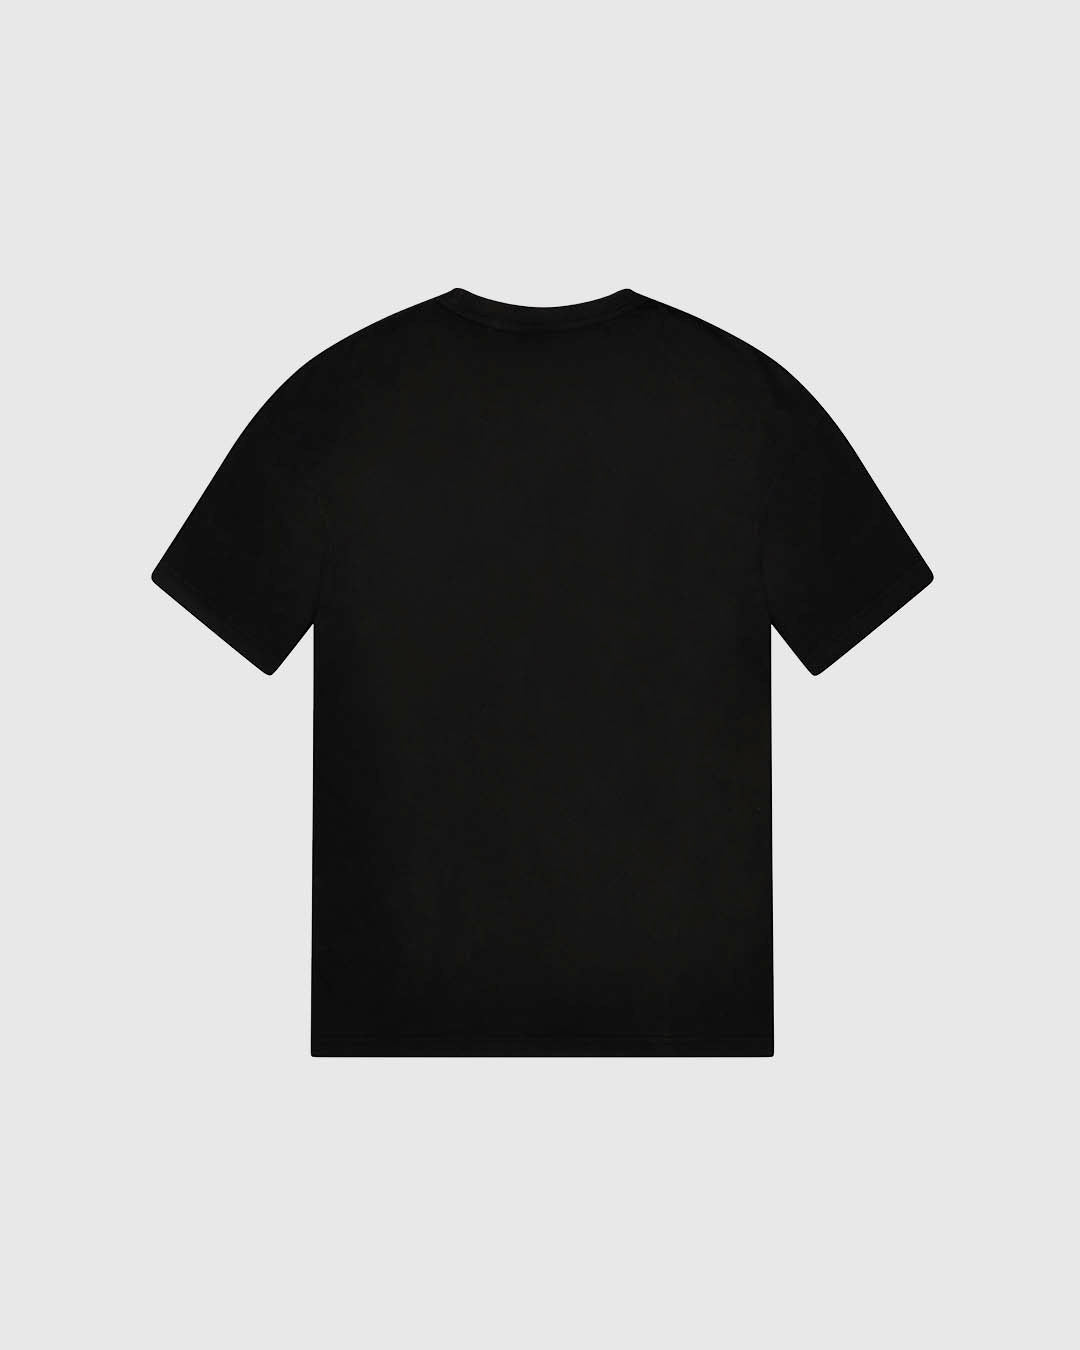 OC: 00-12 - Men's Hartpury T-Shirt - Black